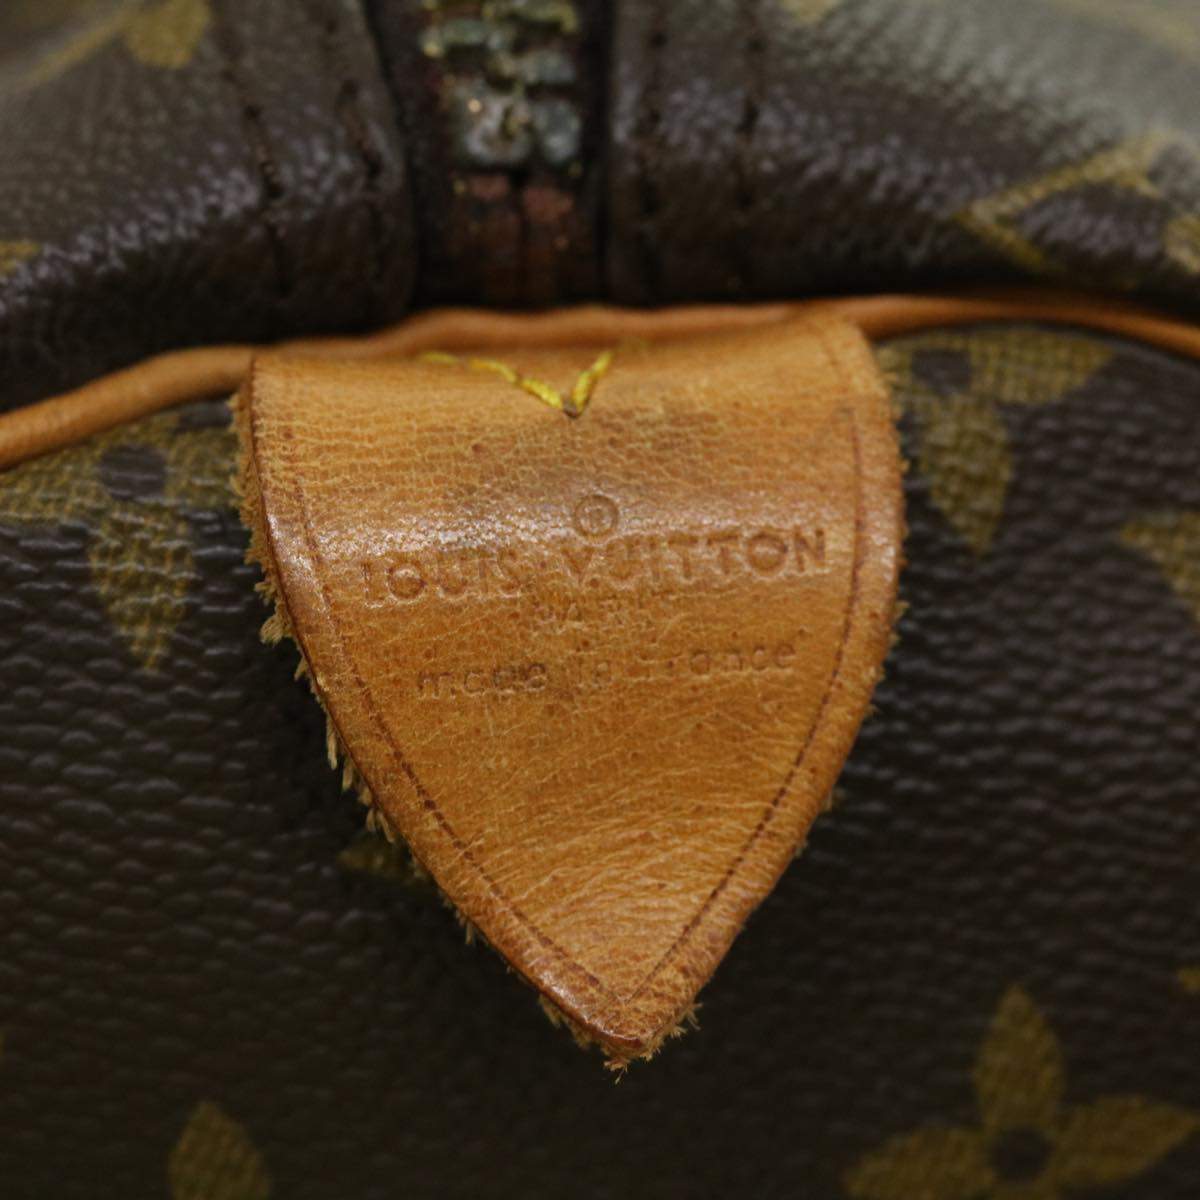 Louis Vuitton Speedy 40 Duffle Handbag Monogram M41522 MB8907 89257 –  brand-jfa